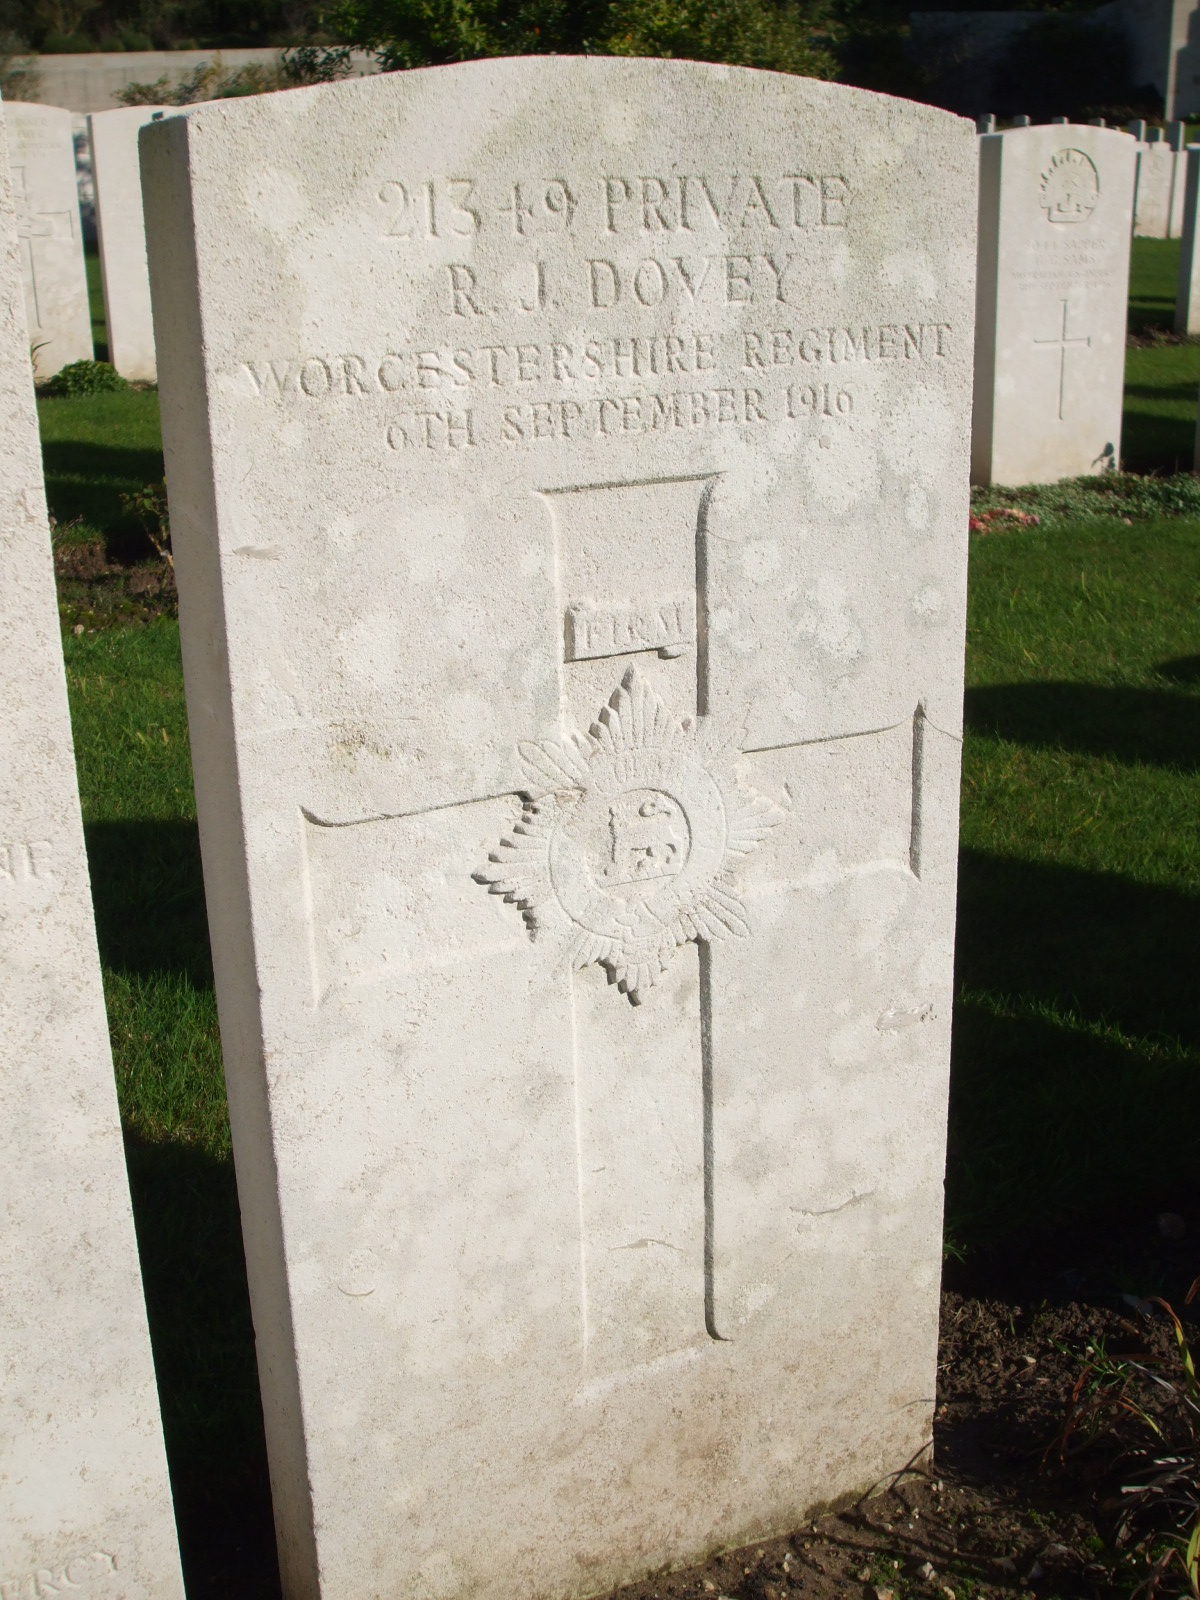 The grave of Richard Dovey at Etaples Military Cemetery.